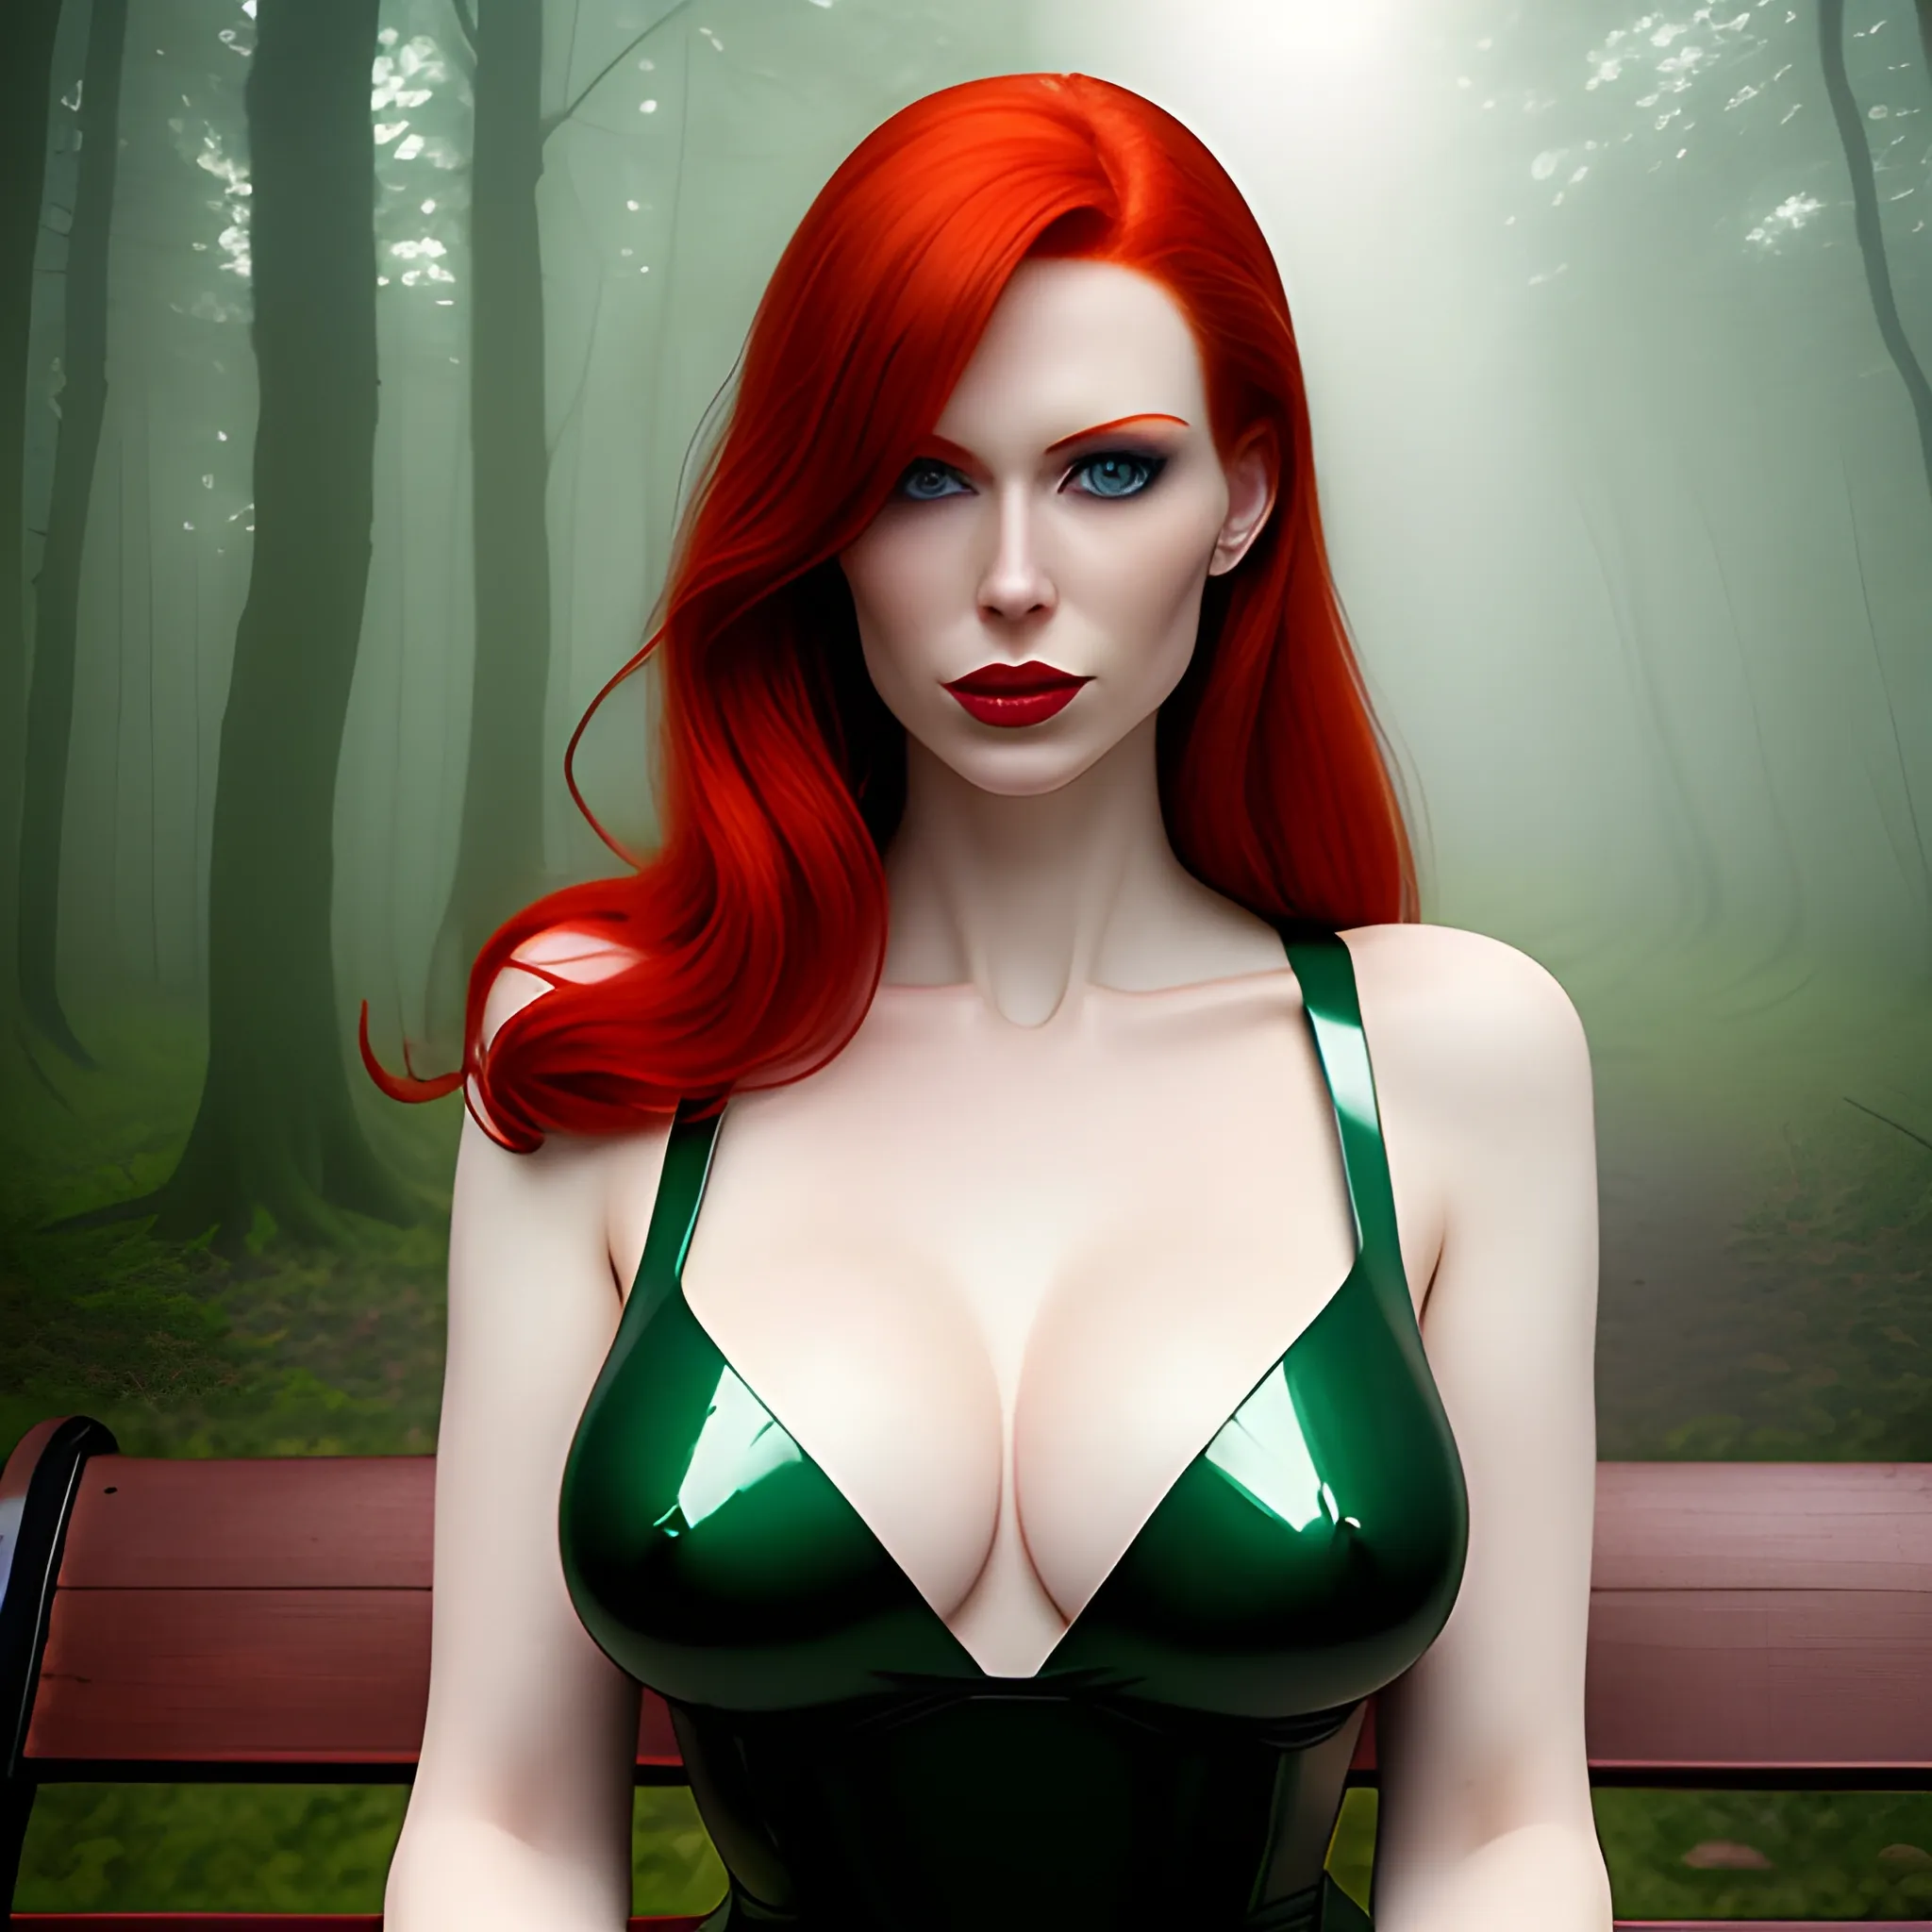 AI Art: Busty milf redhead saying hello by @Savant Renders